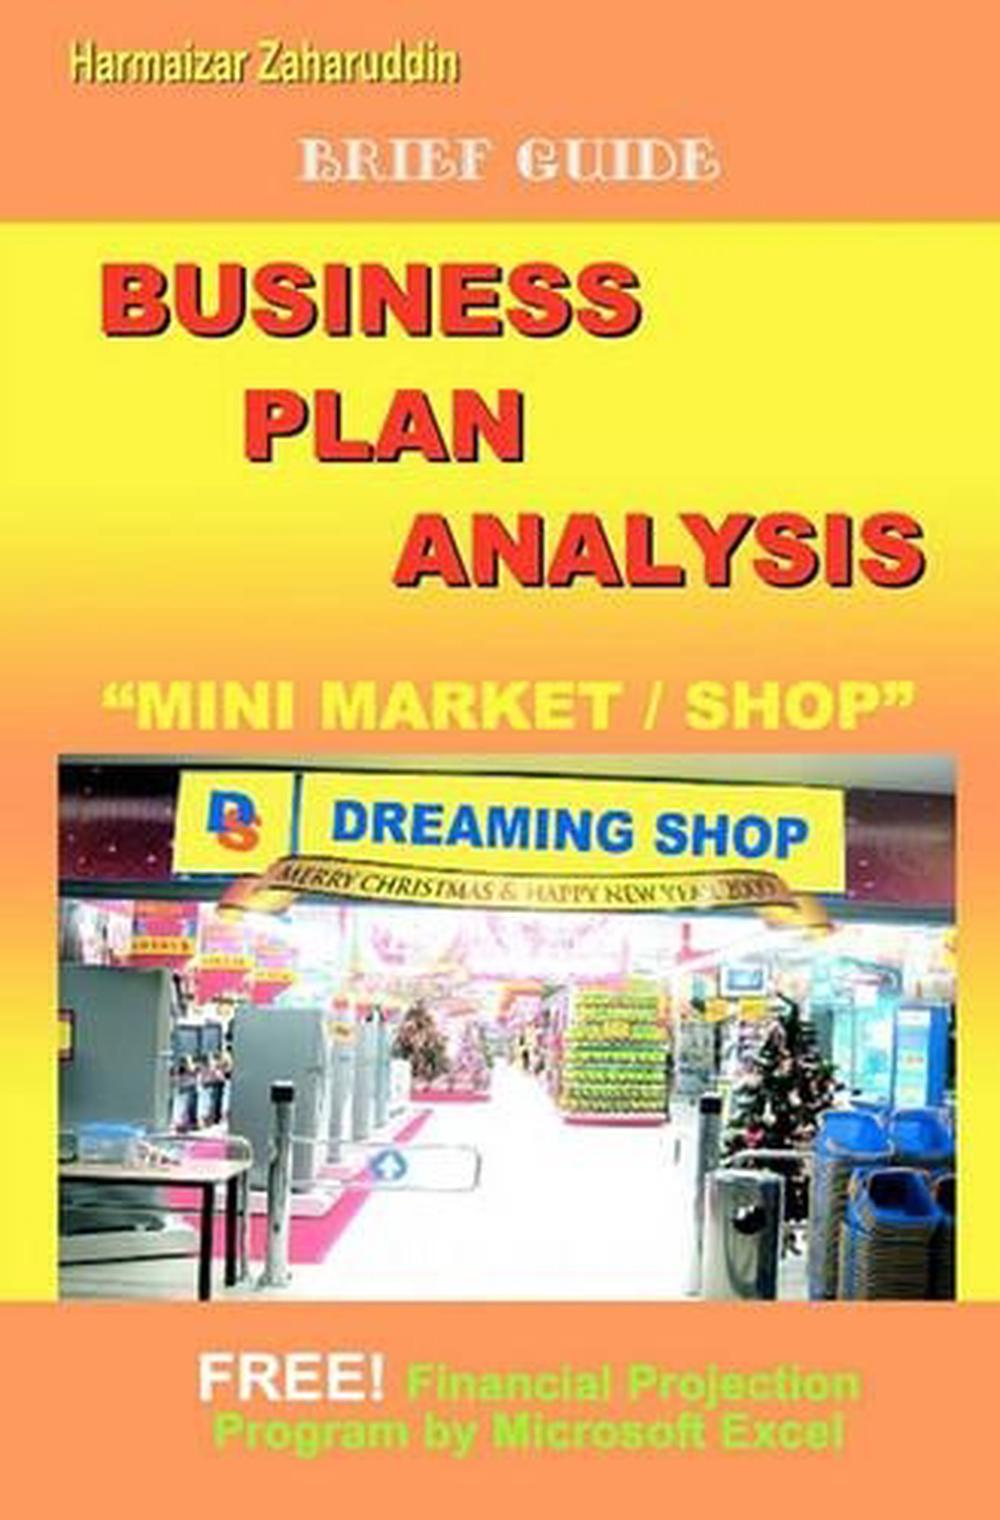 mini mart business plan